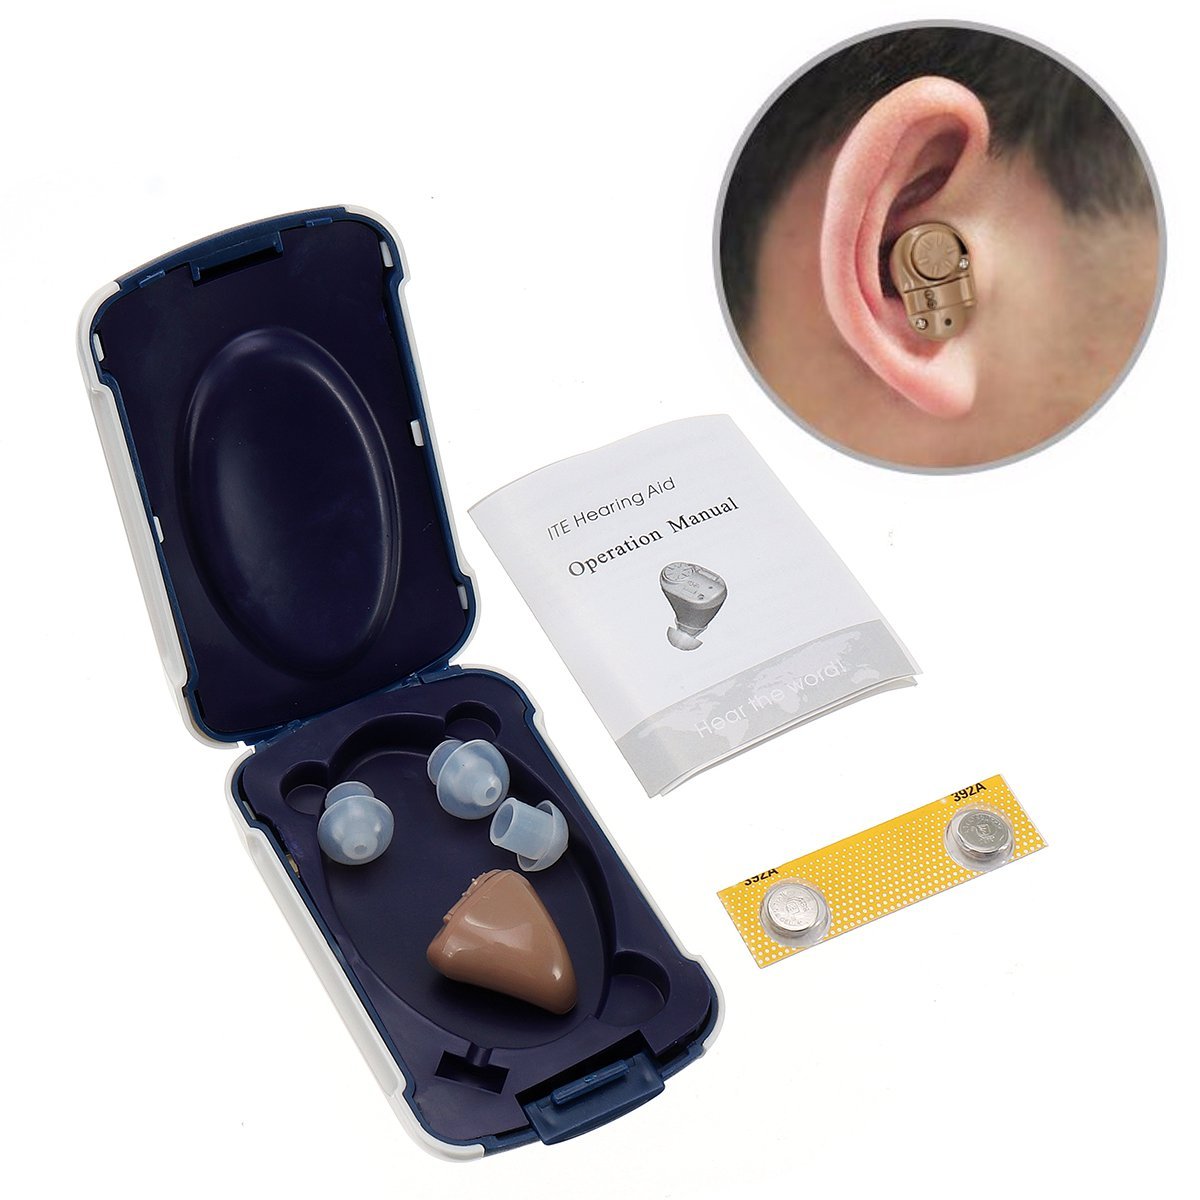 Aliexpress.com : Buy Best Digital Tone Hearing Aid New ...